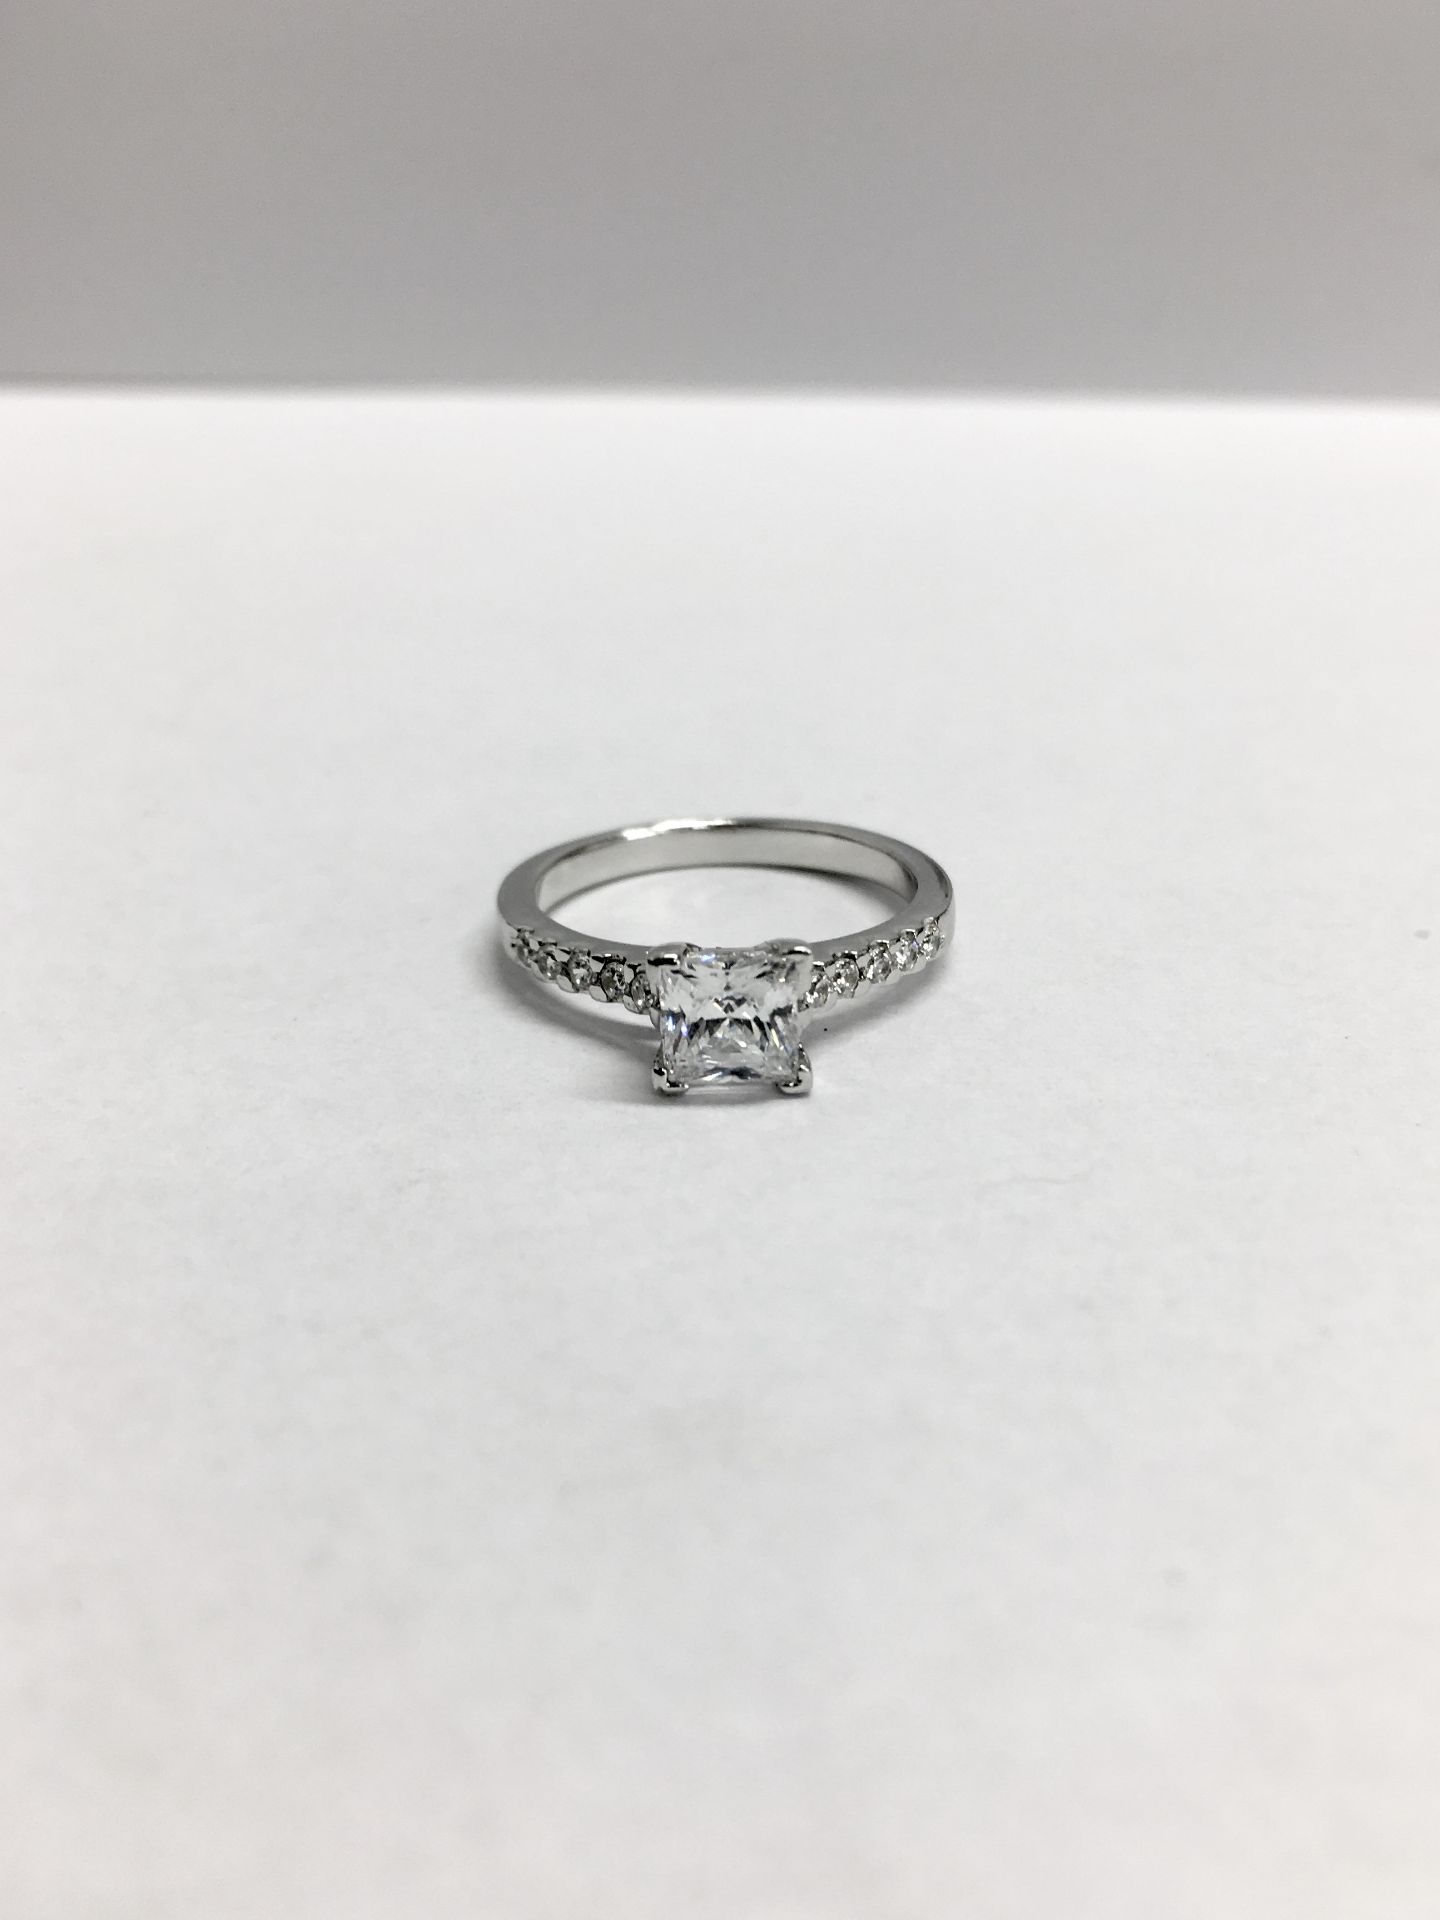 Platinum diamond solitaire ring,0.45ct princess,h colour si2 clarity,4.15gms platinum ,10 diamonds - Image 2 of 4